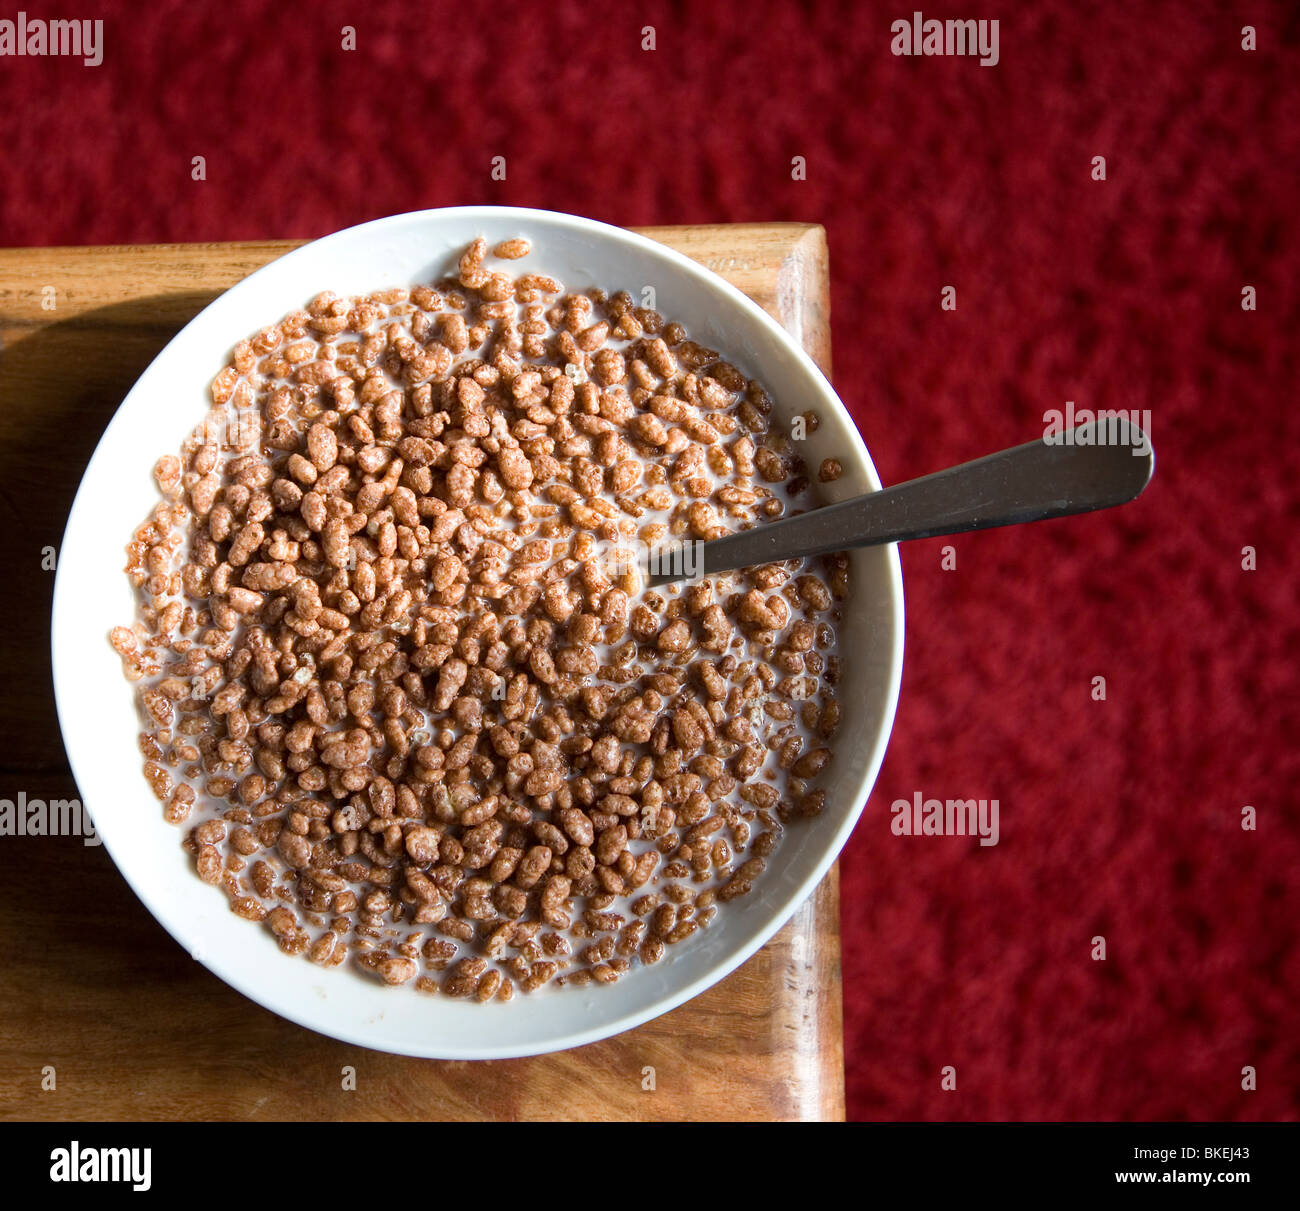 Coco Pops breakfast cereal in bowl Stock Photo - Alamy